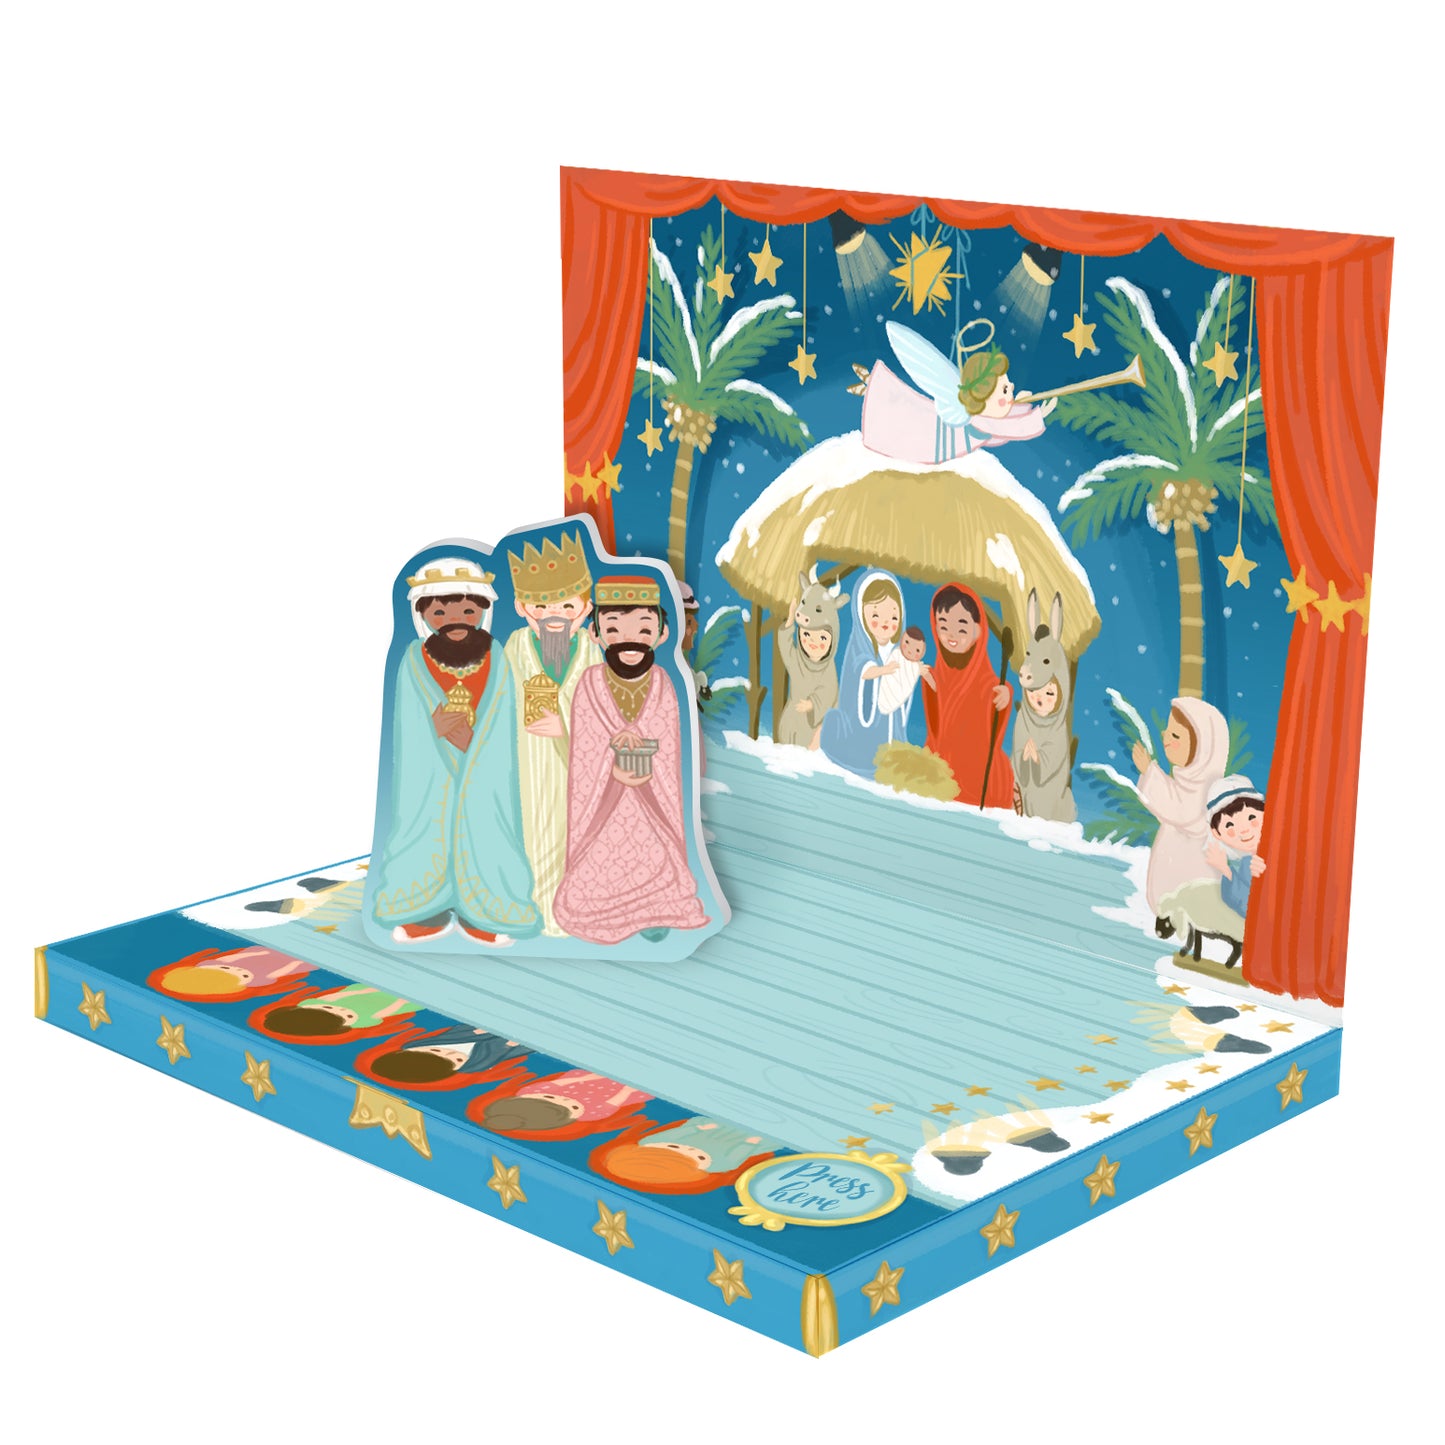 The Little Nativity Music Box Card Novelty Dancing Musical Christmas Card